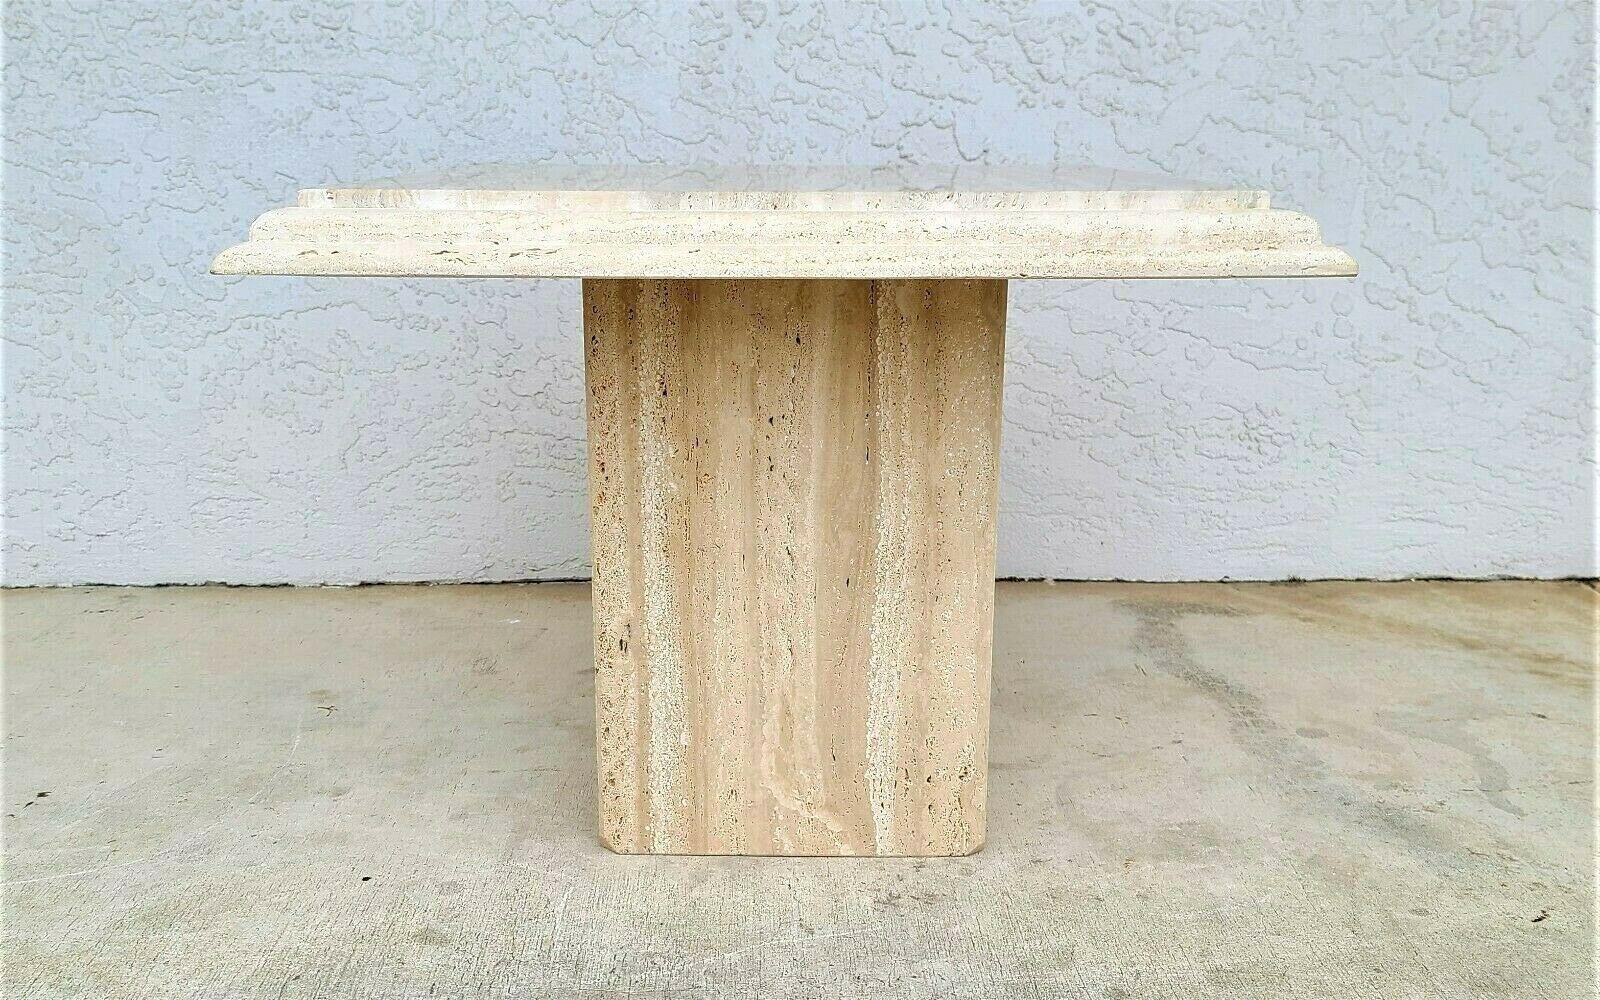 italian stone table